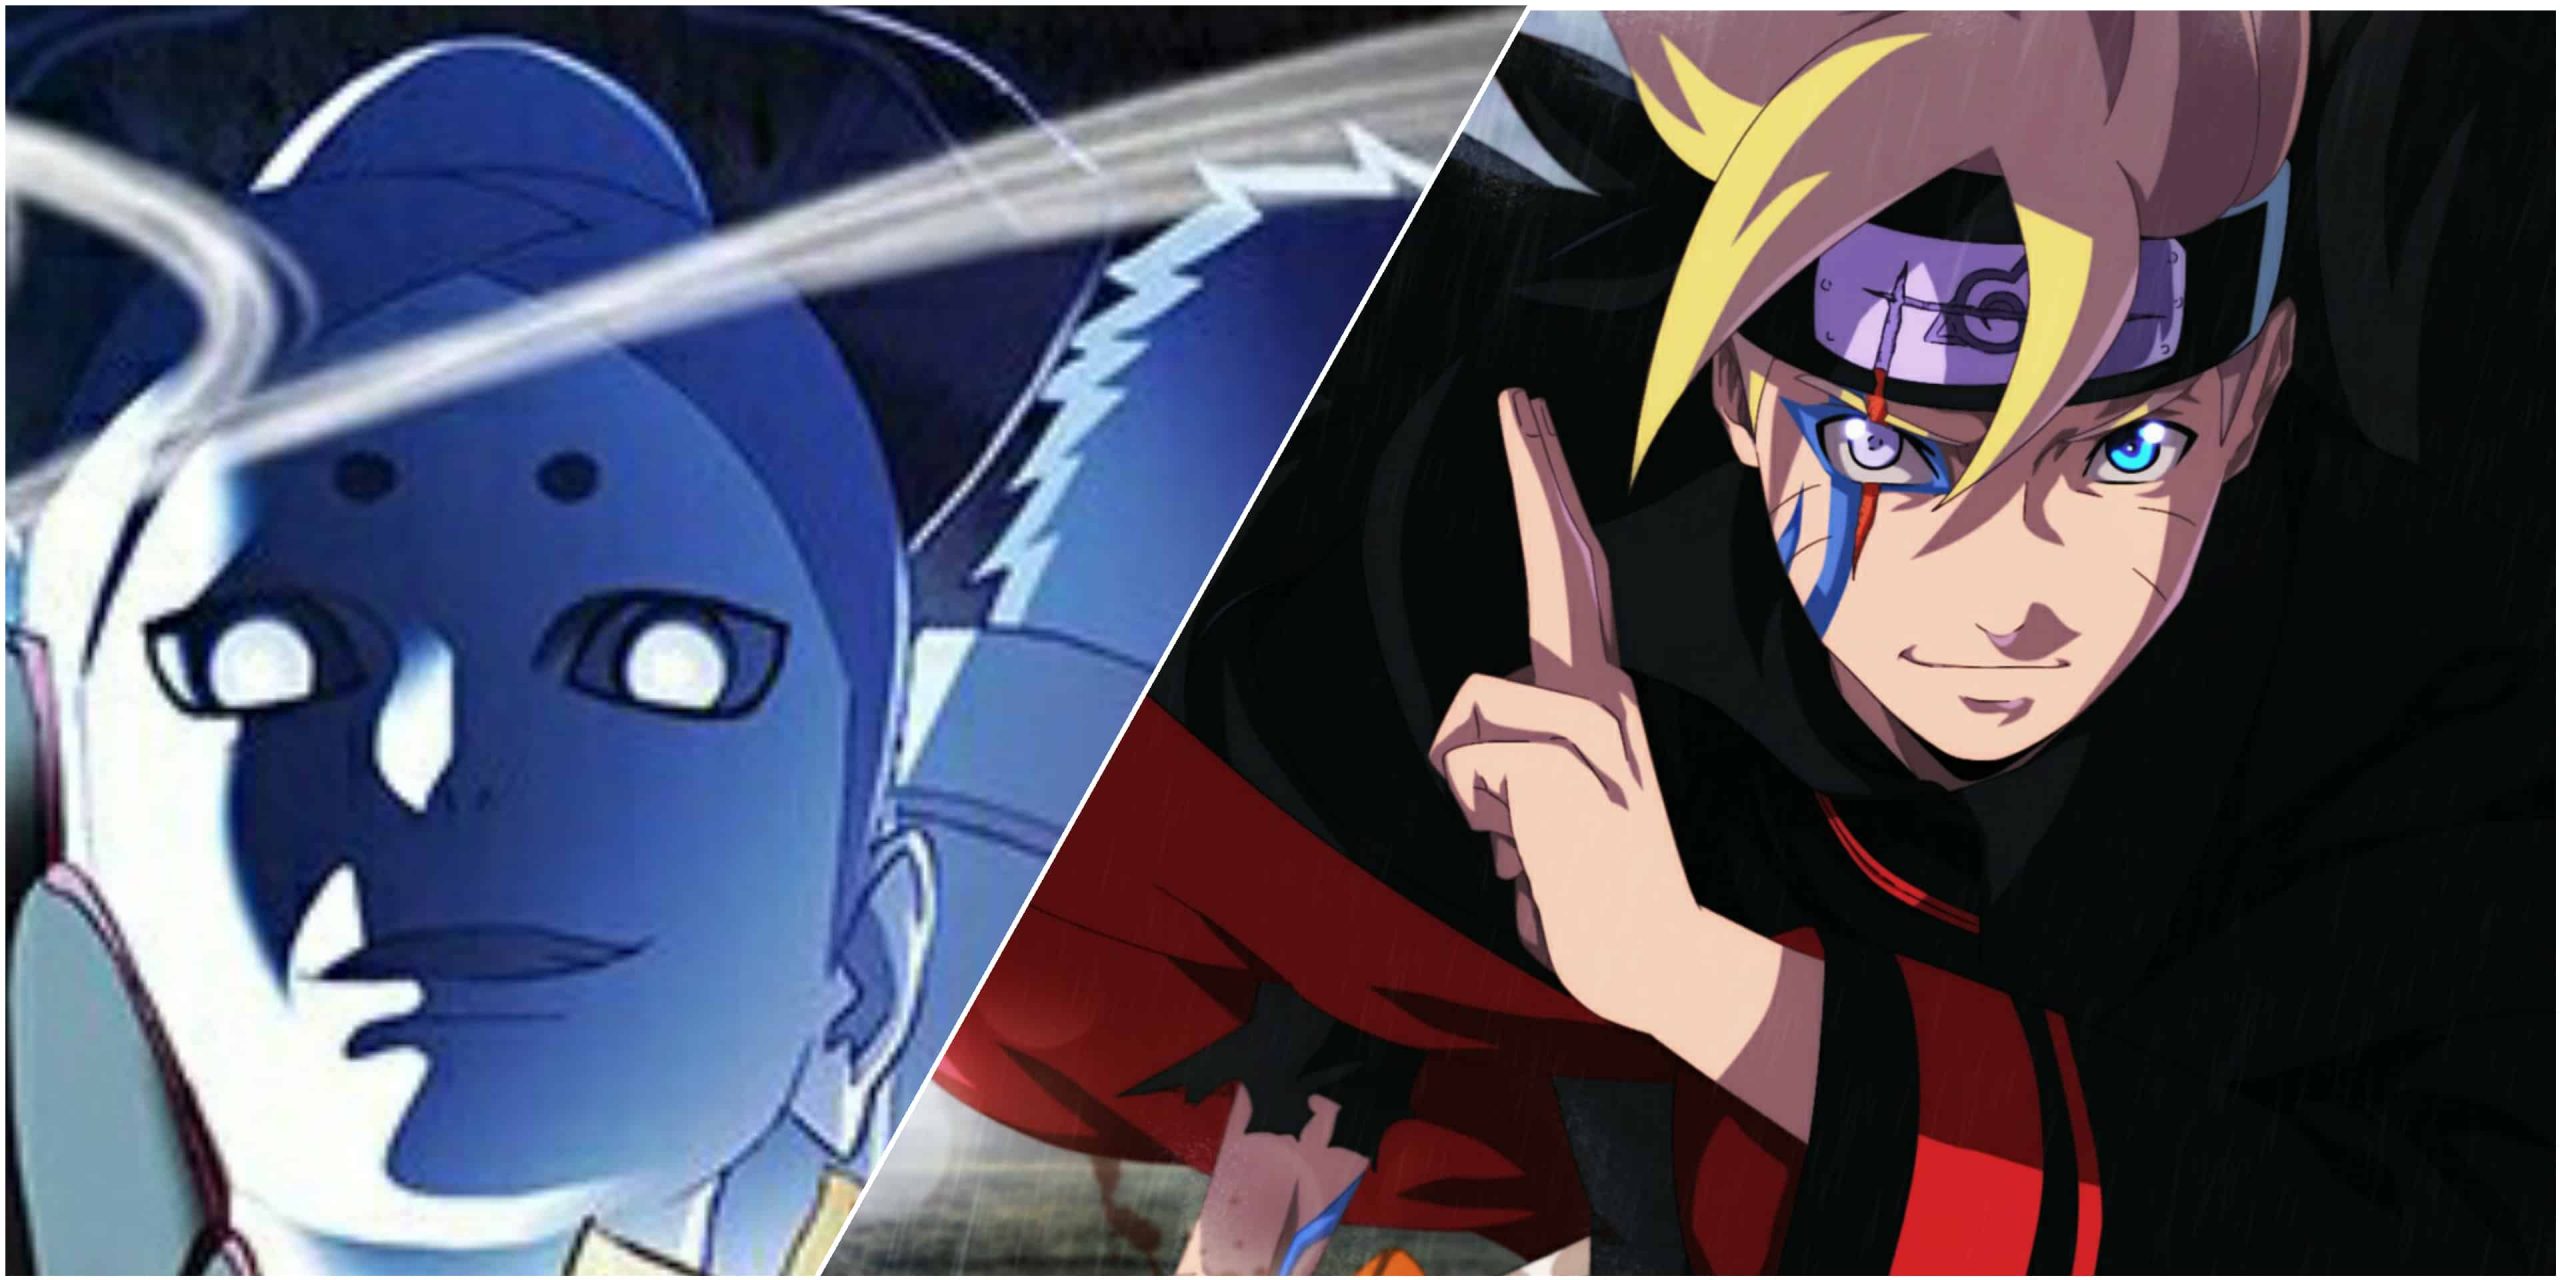 Episódio dessa semana de Boruto: Naruto Next Generations traz a